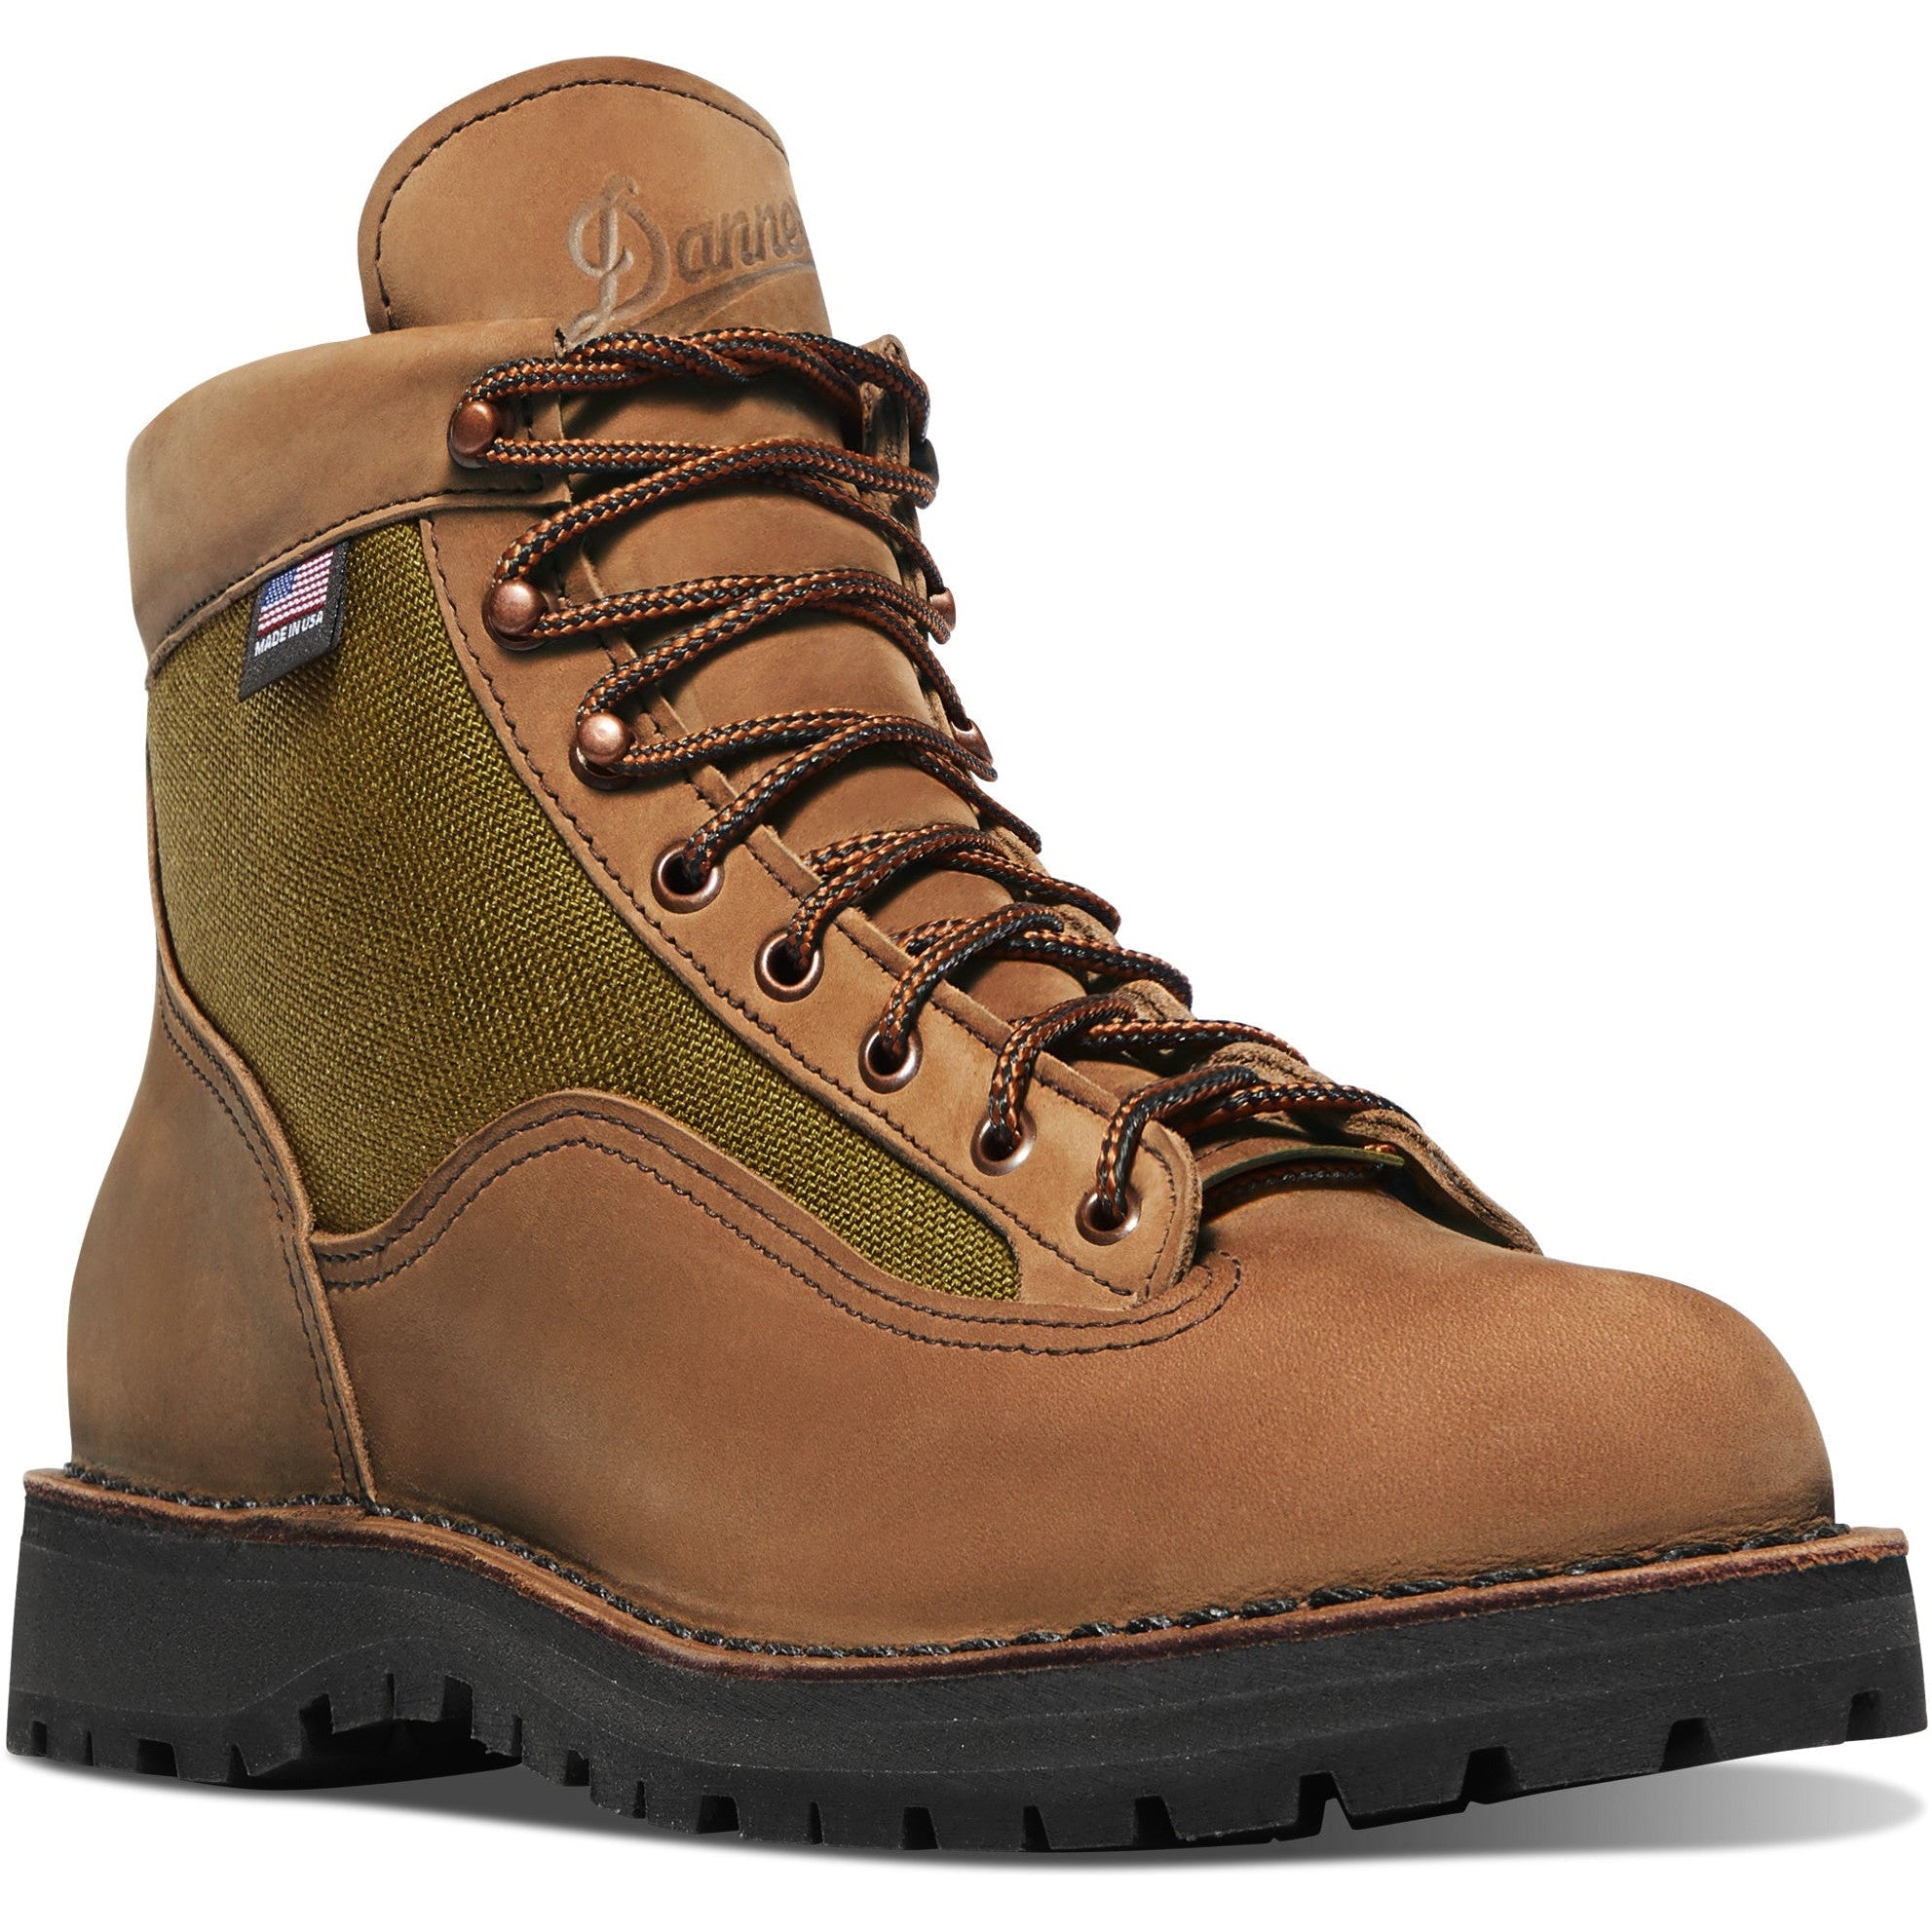 Danner Men's Light II 6" WP USA Made Hiking Boot - Brown - 33000 6 / Wide / Brown - Overlook Boots